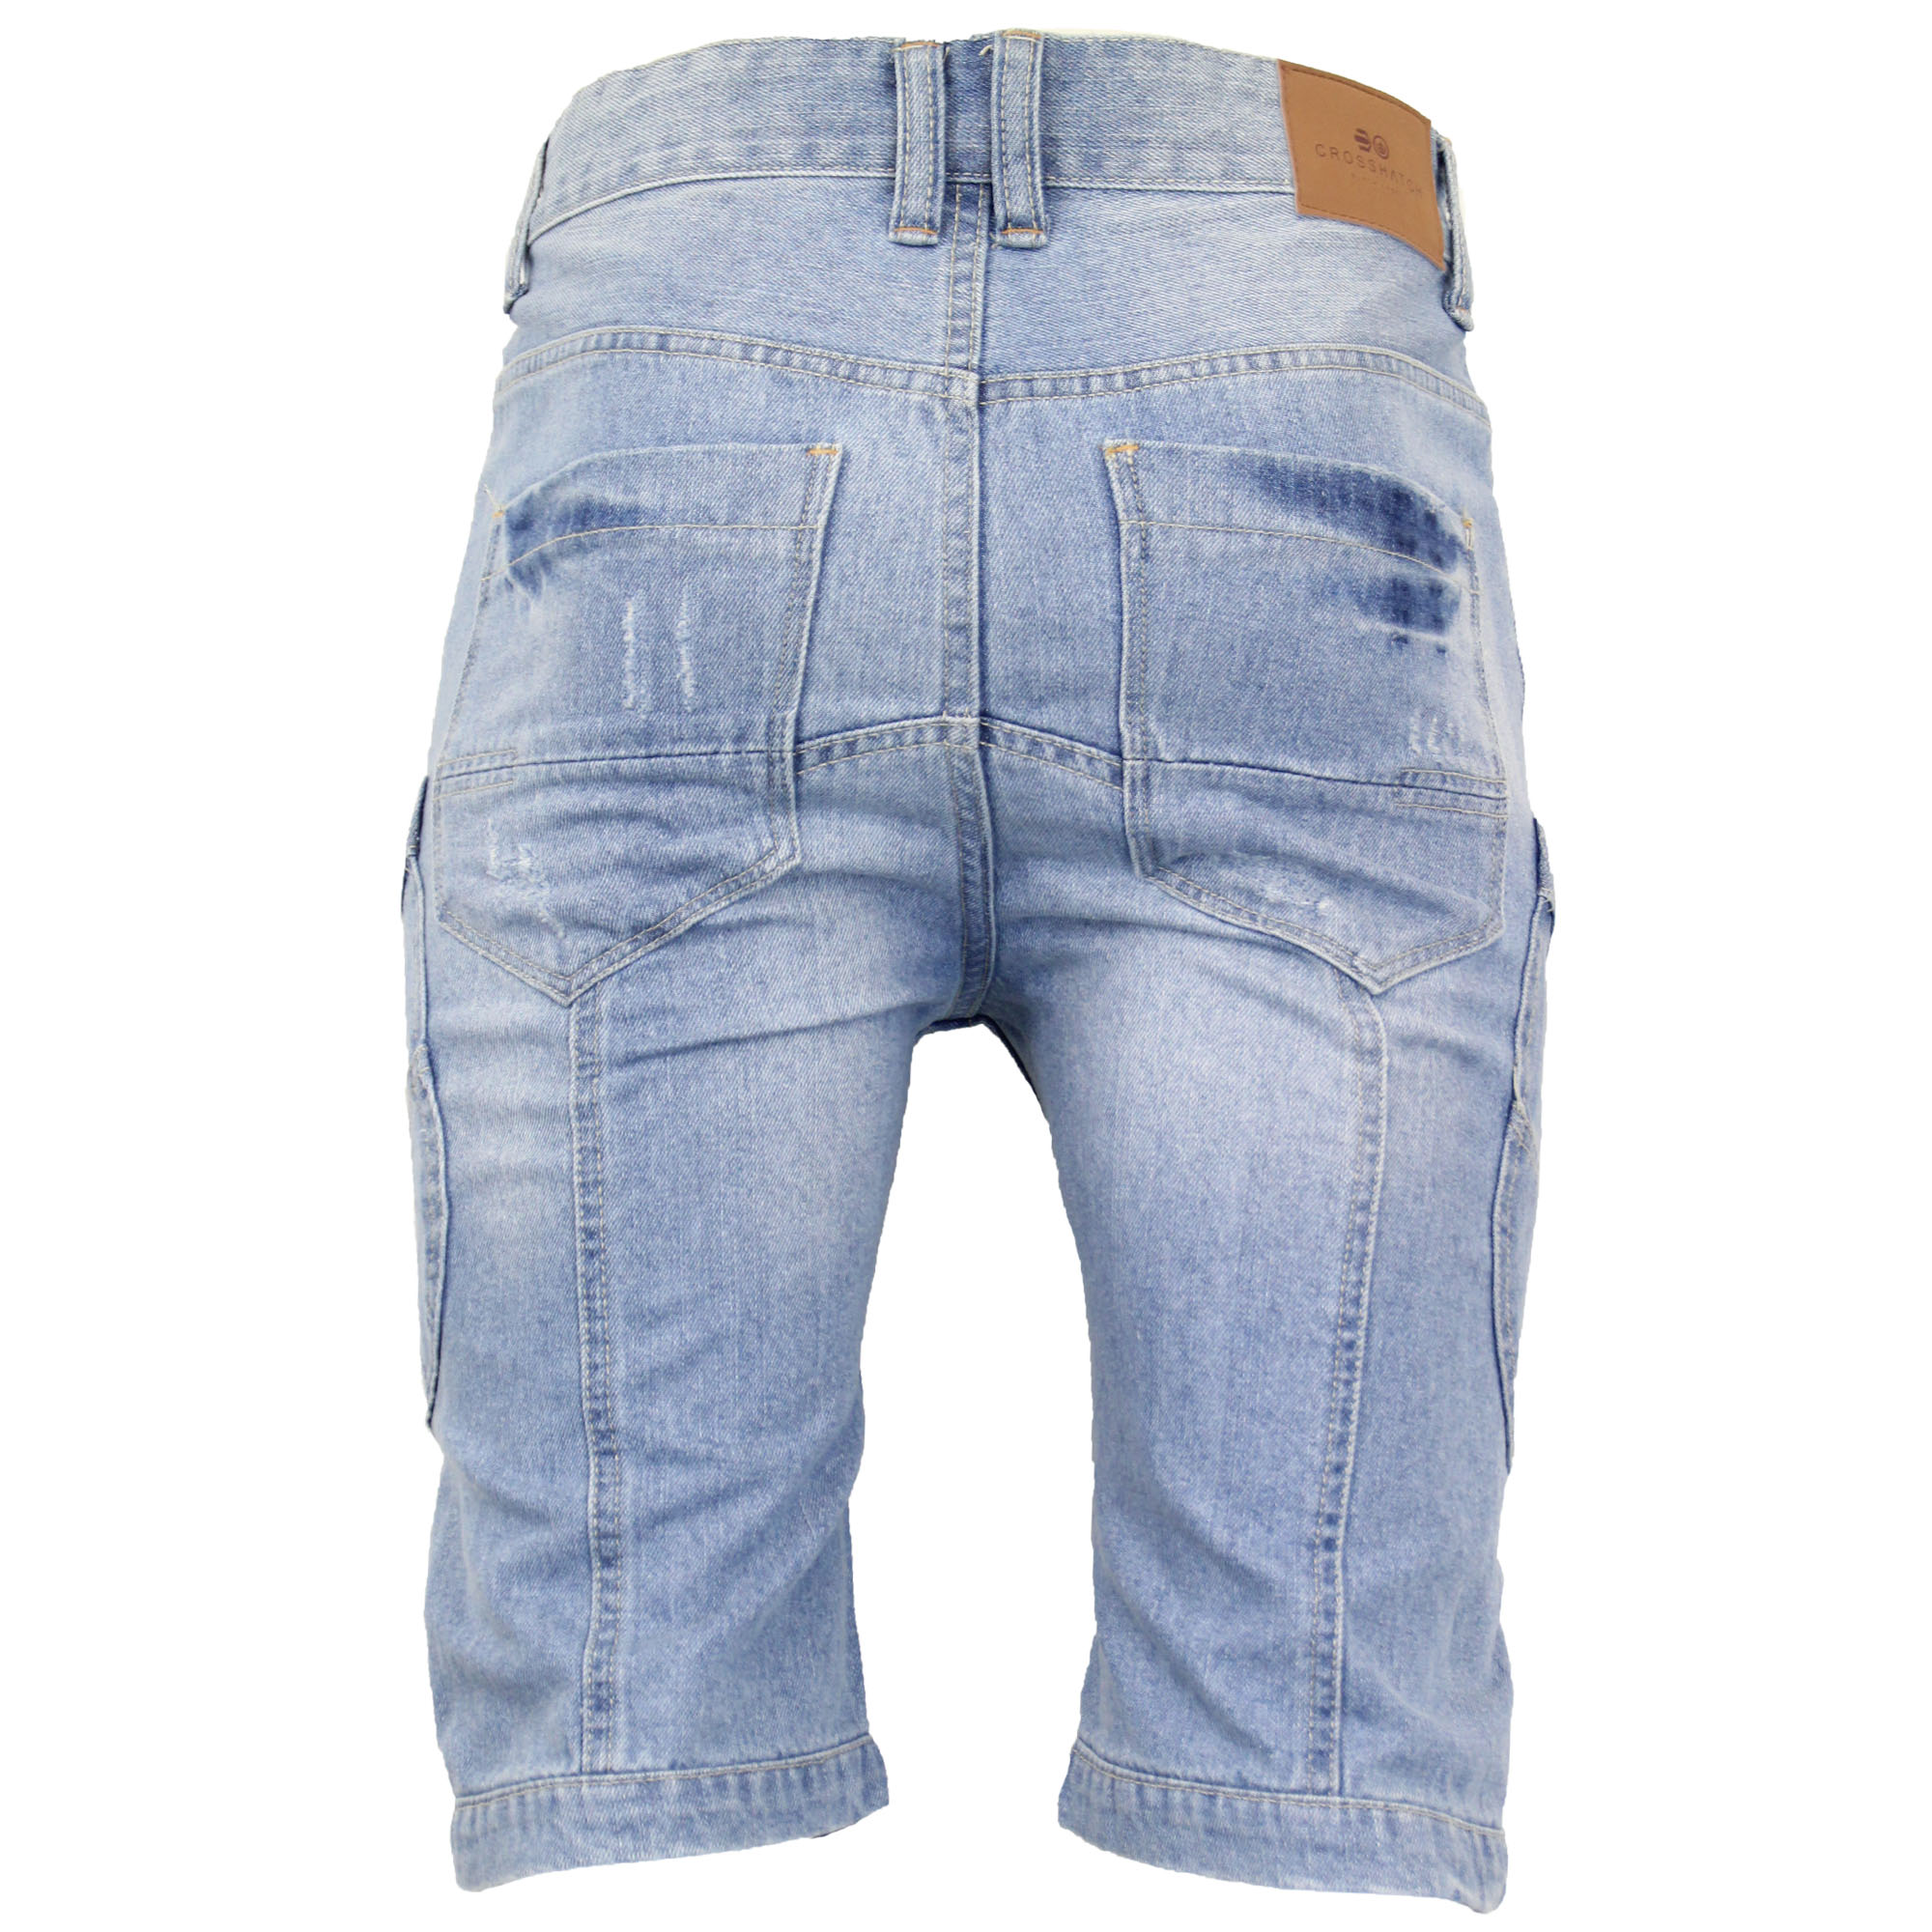 crosshatch jean shorts